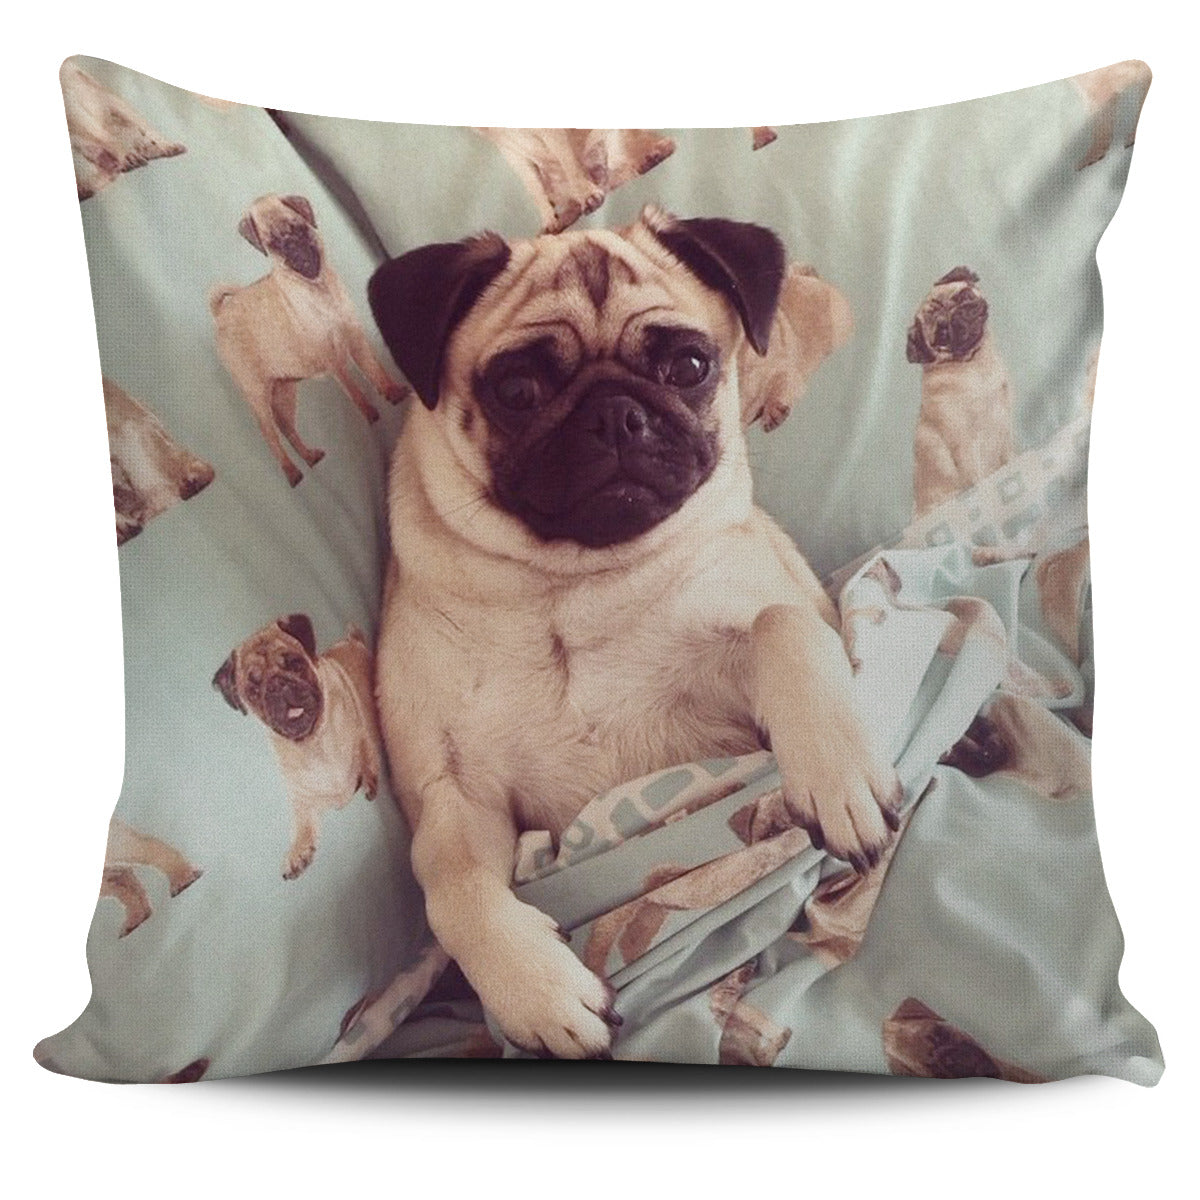 Pug In A Blanket Pillow Cover - pug bestseller - KiwiLou